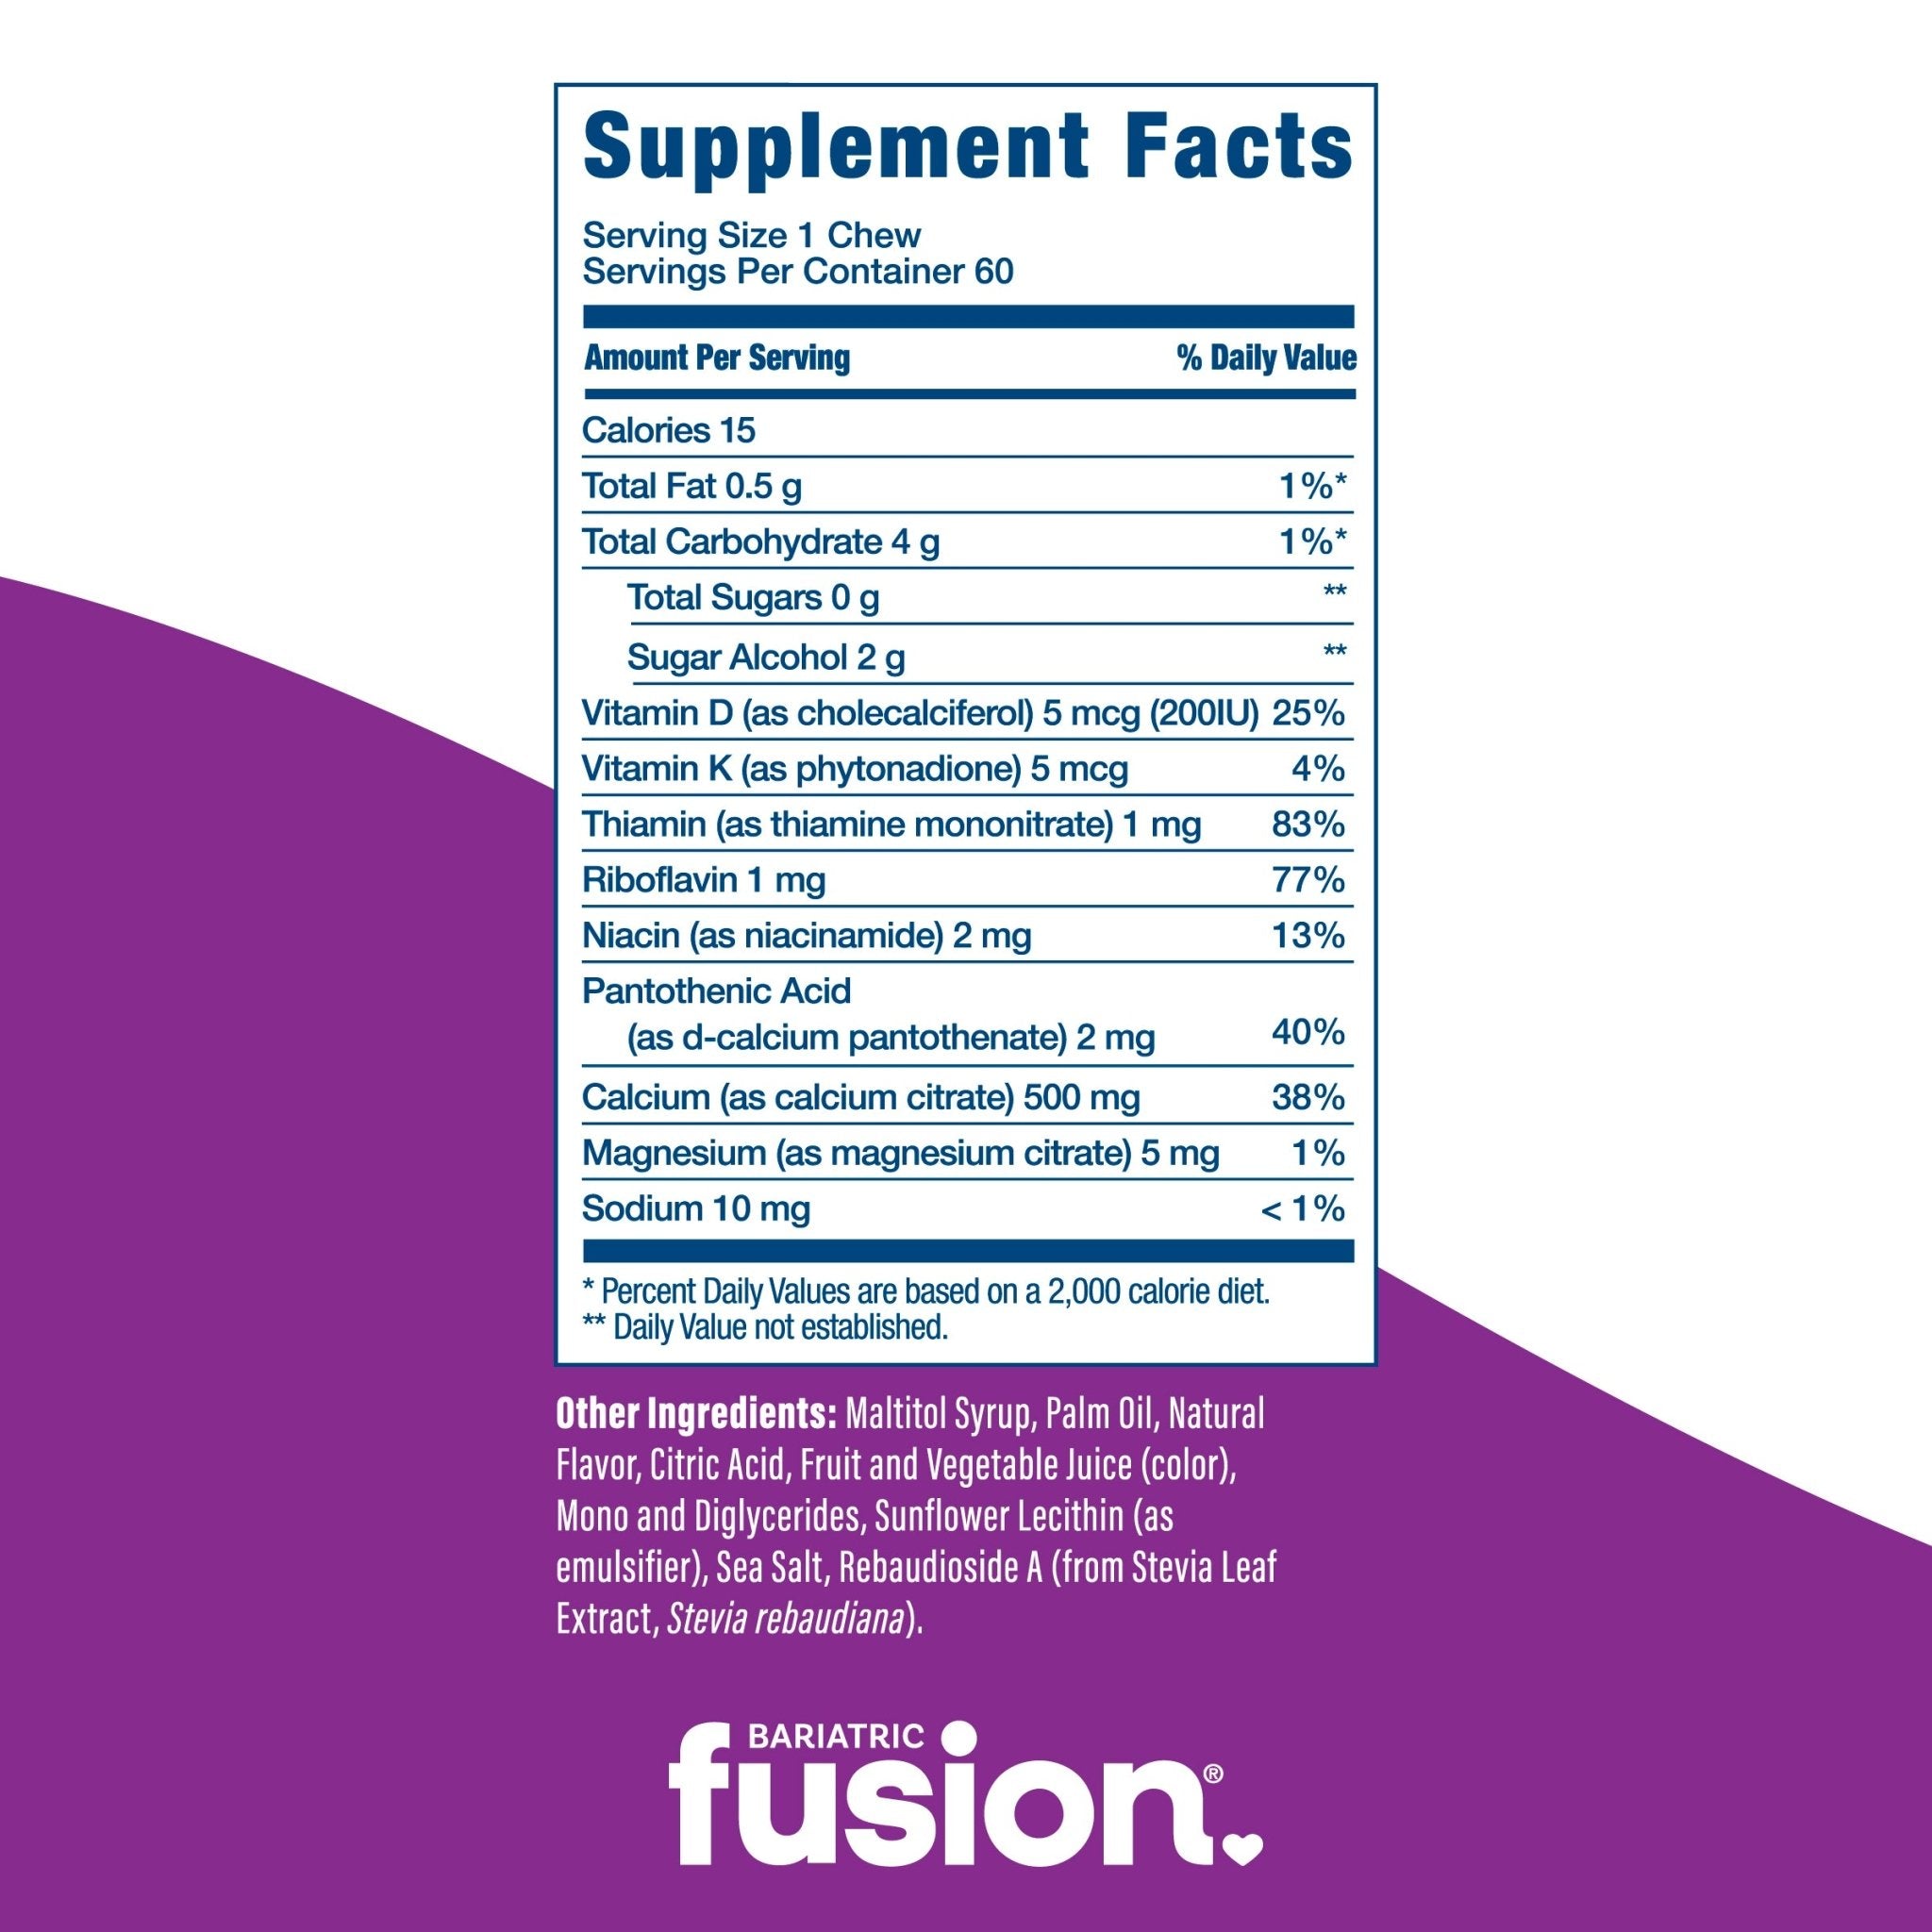 Cran-Grape Bariatric Calcium Citrate Soft Chews supplement facts.